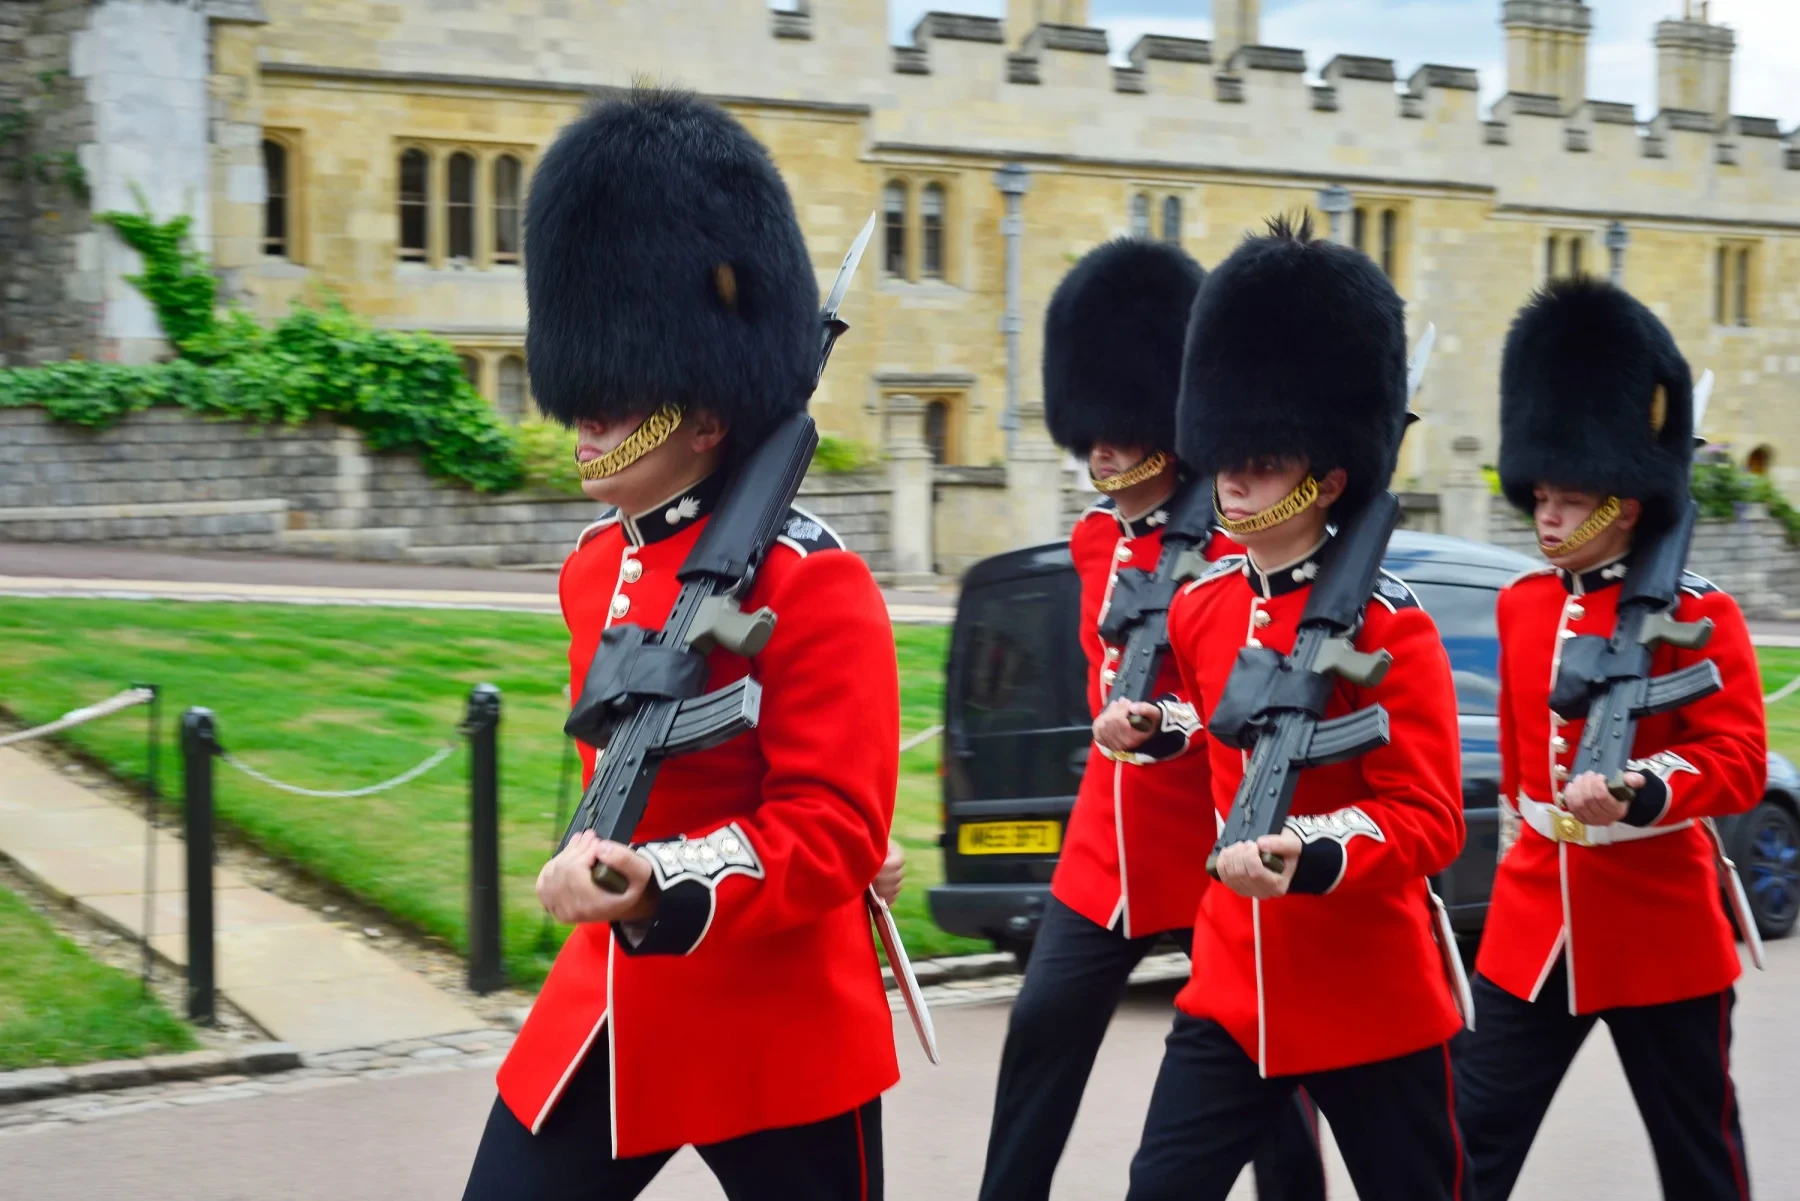 Four London guards at Windsor Castle